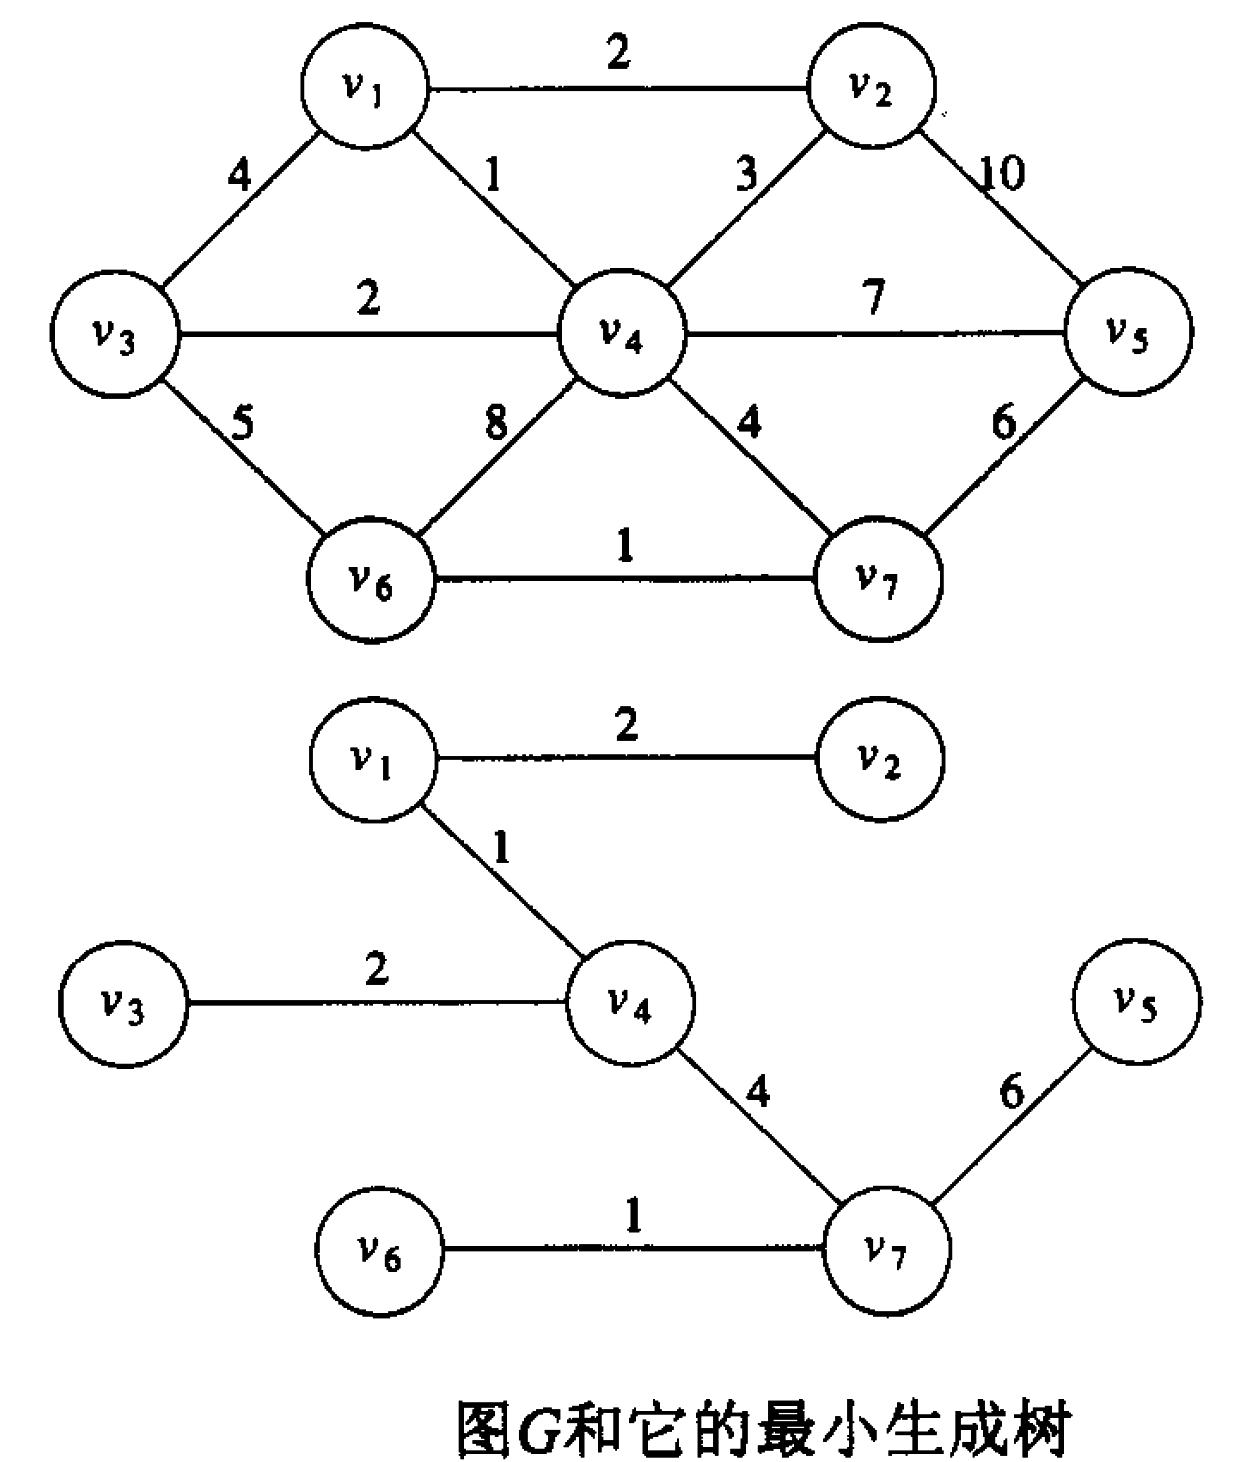 graph_minimum_spanning_tree.gif